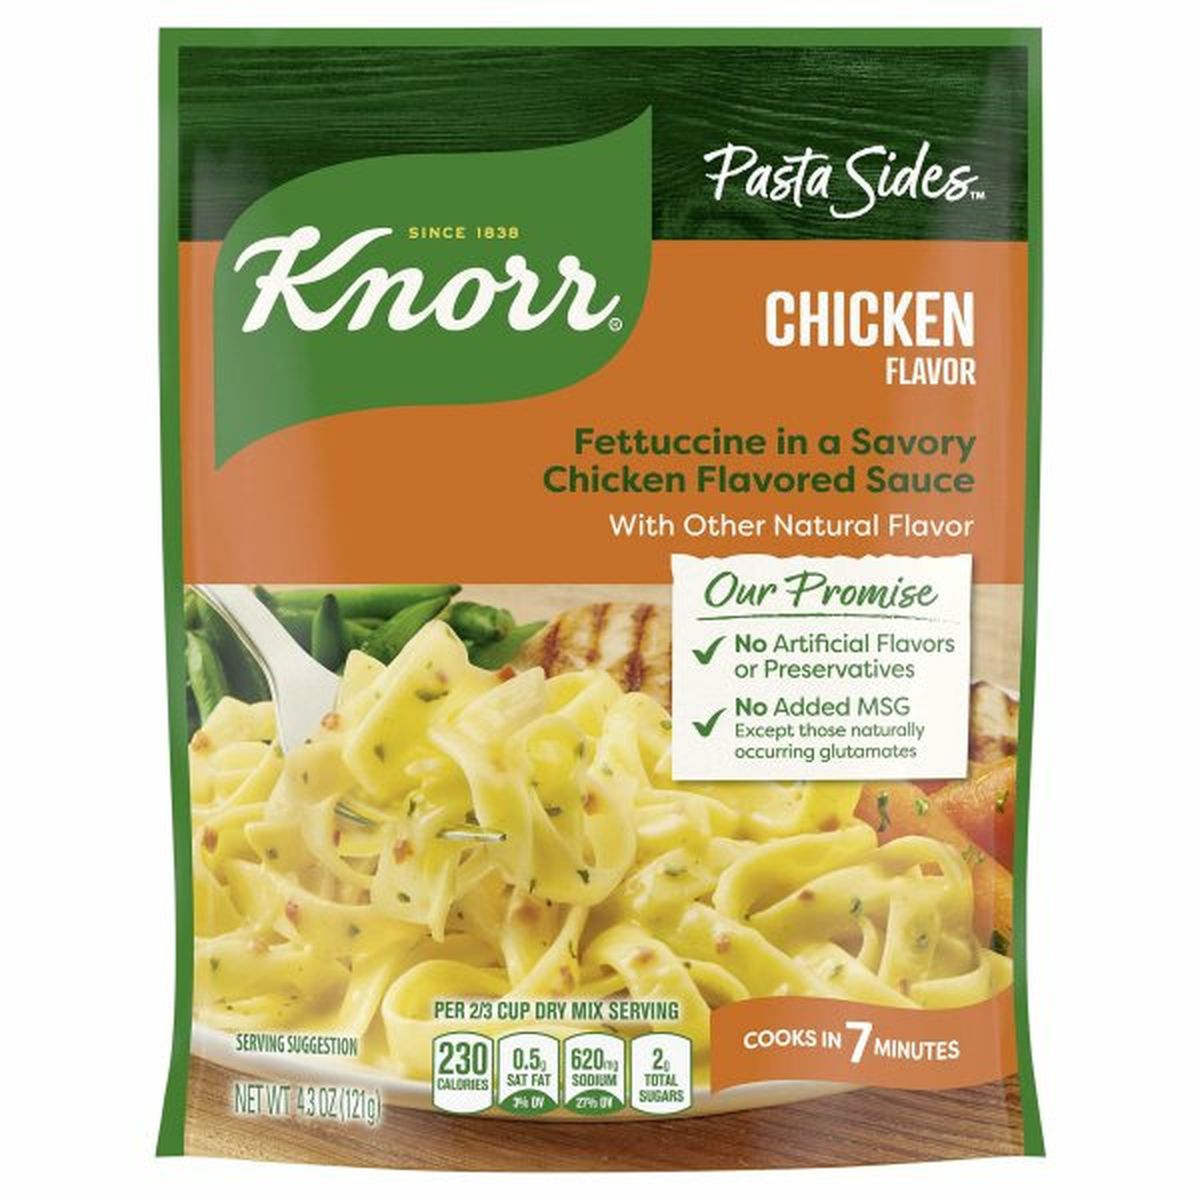 Calories in Knorr Pasta Sides, Chicken Flavor